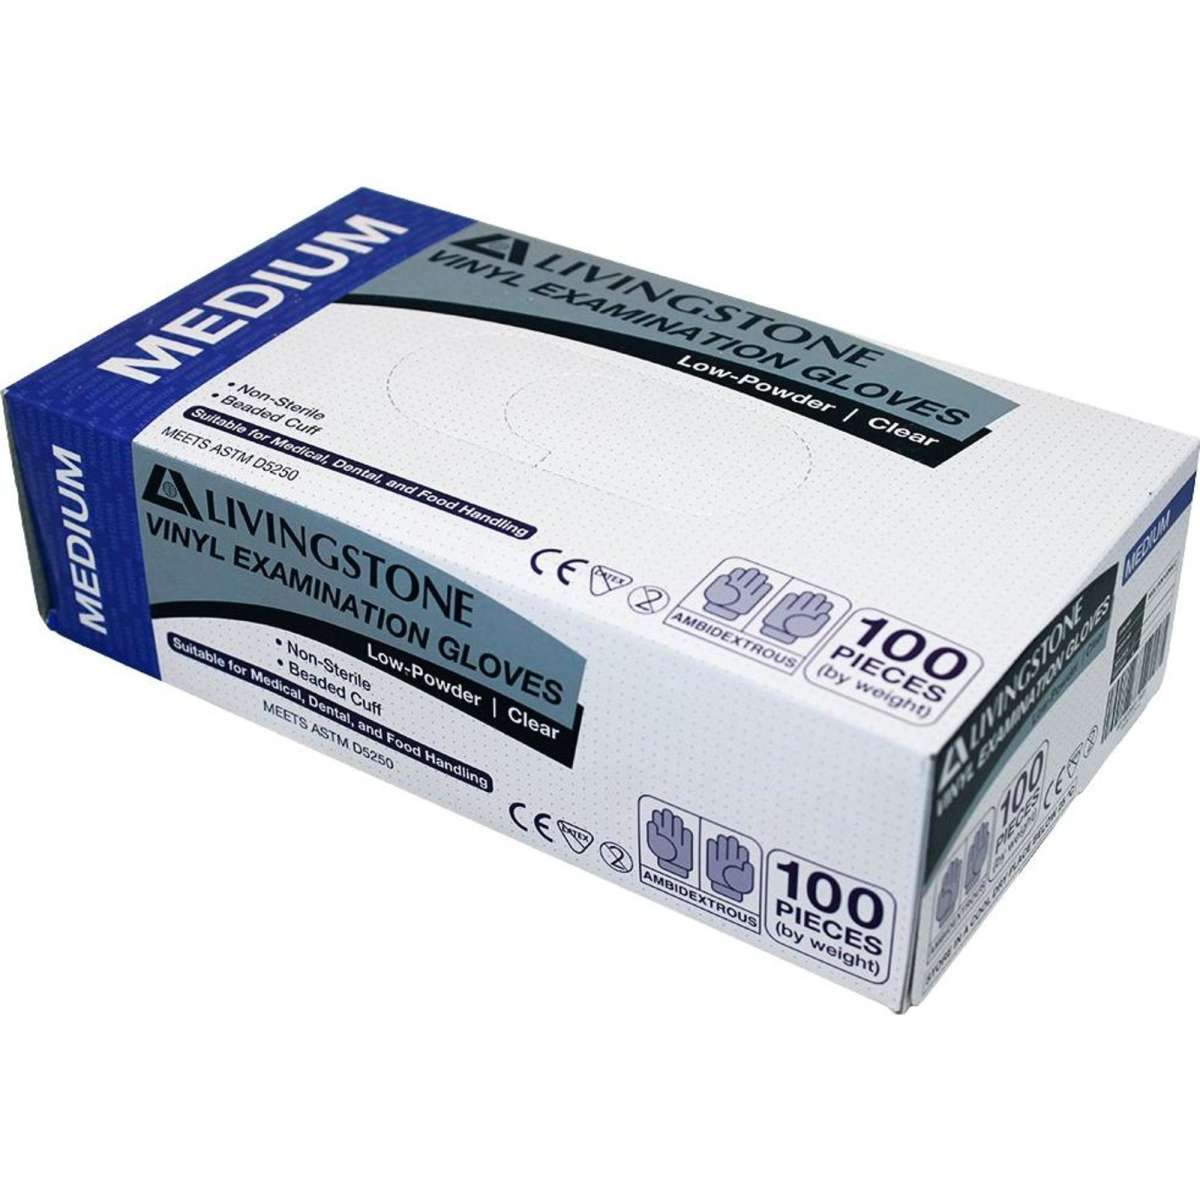 Livingstone Vinyl Examination Gloves All Purpose Low Powder Medium Clear 100 in a Box